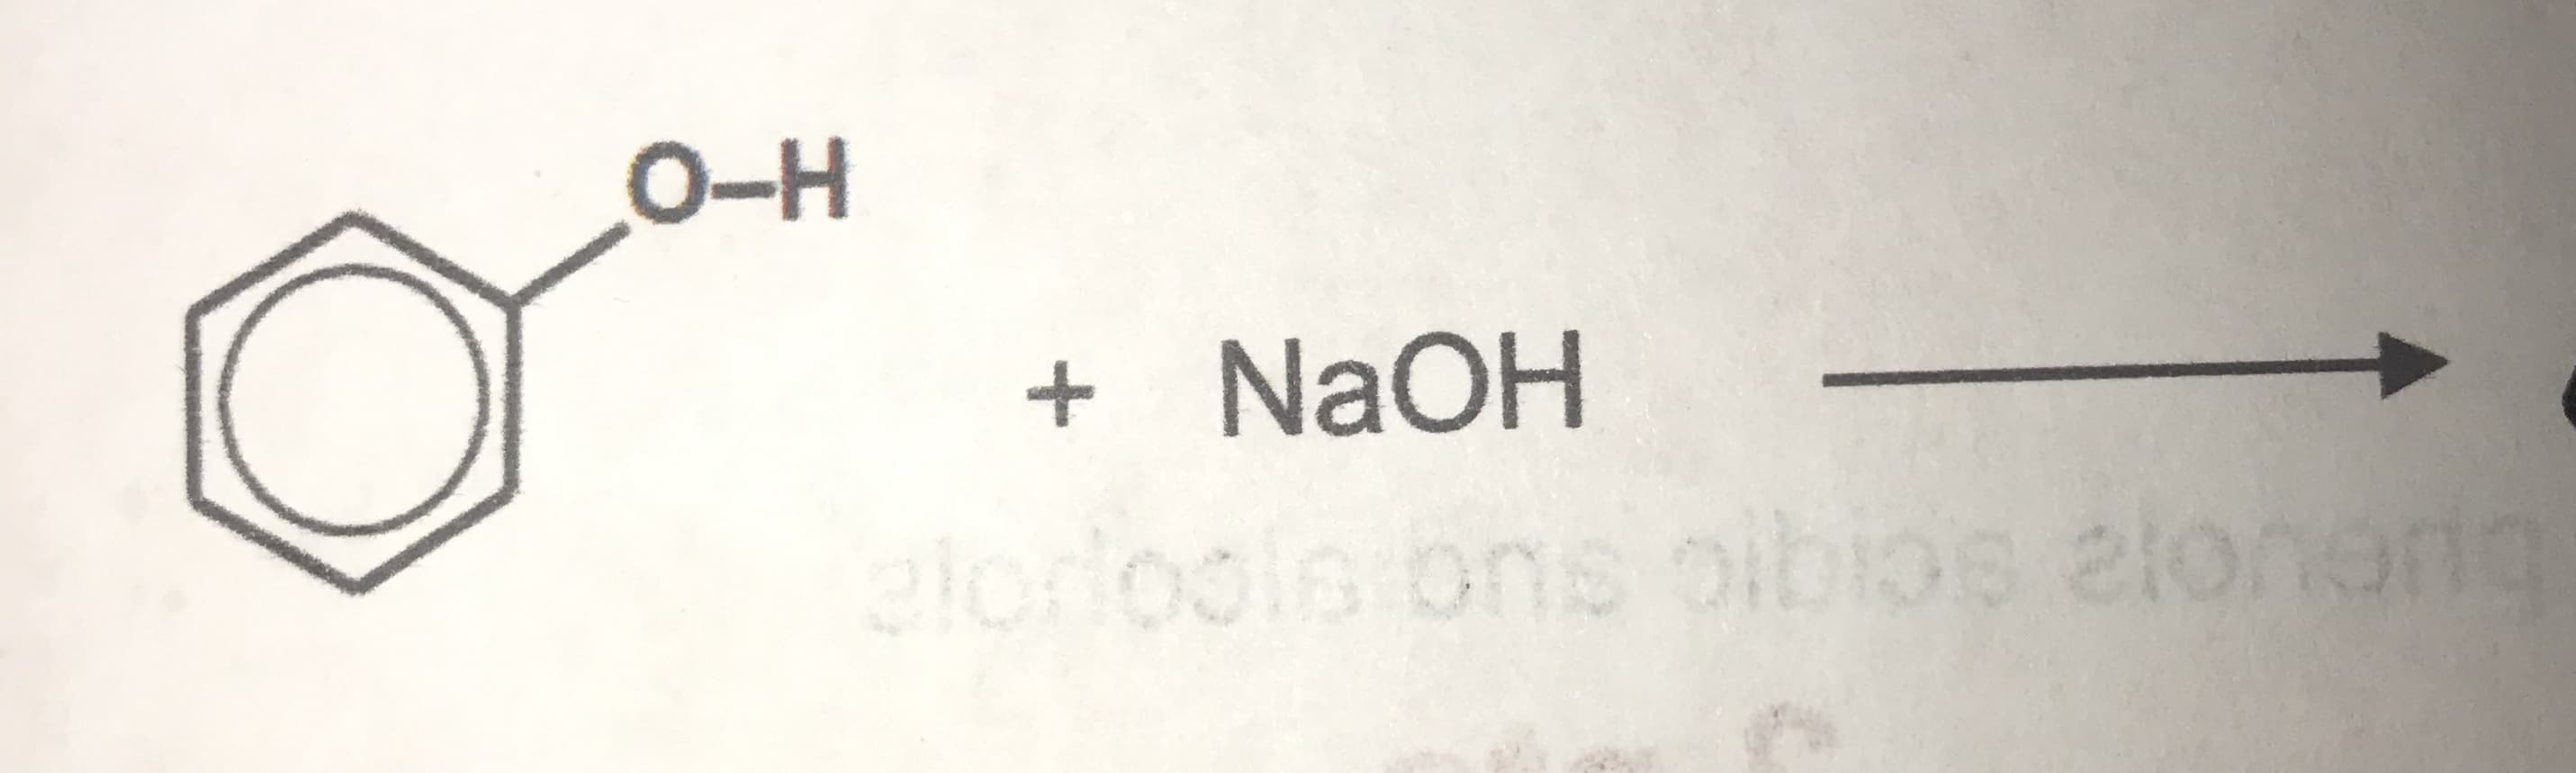 O-H
+ NAOH
eloriools ons
oibios alonert
